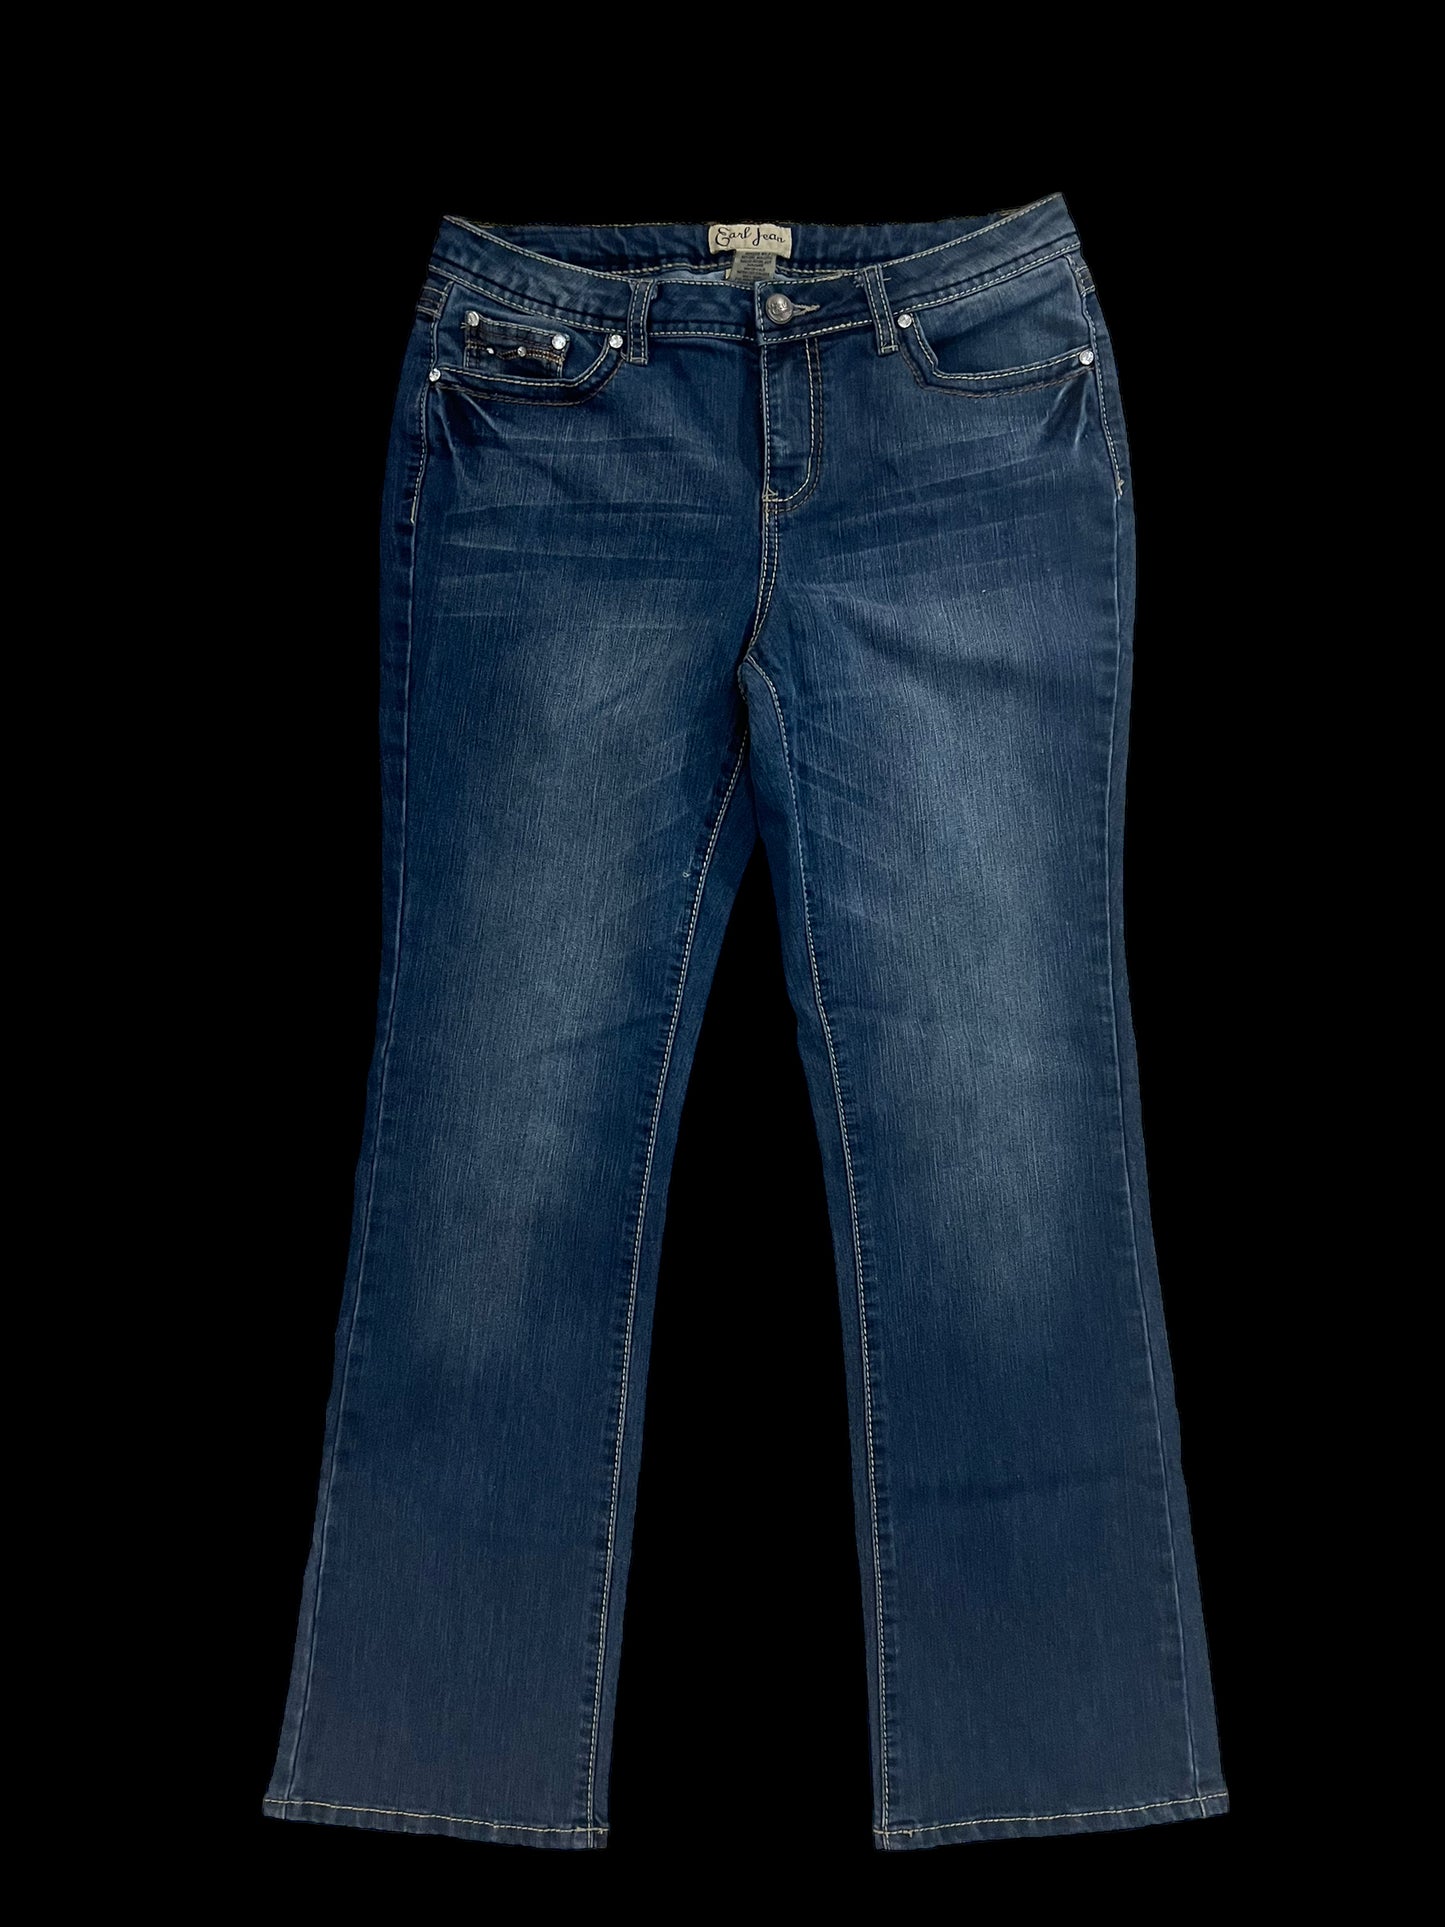 Embellished bootcut jeans